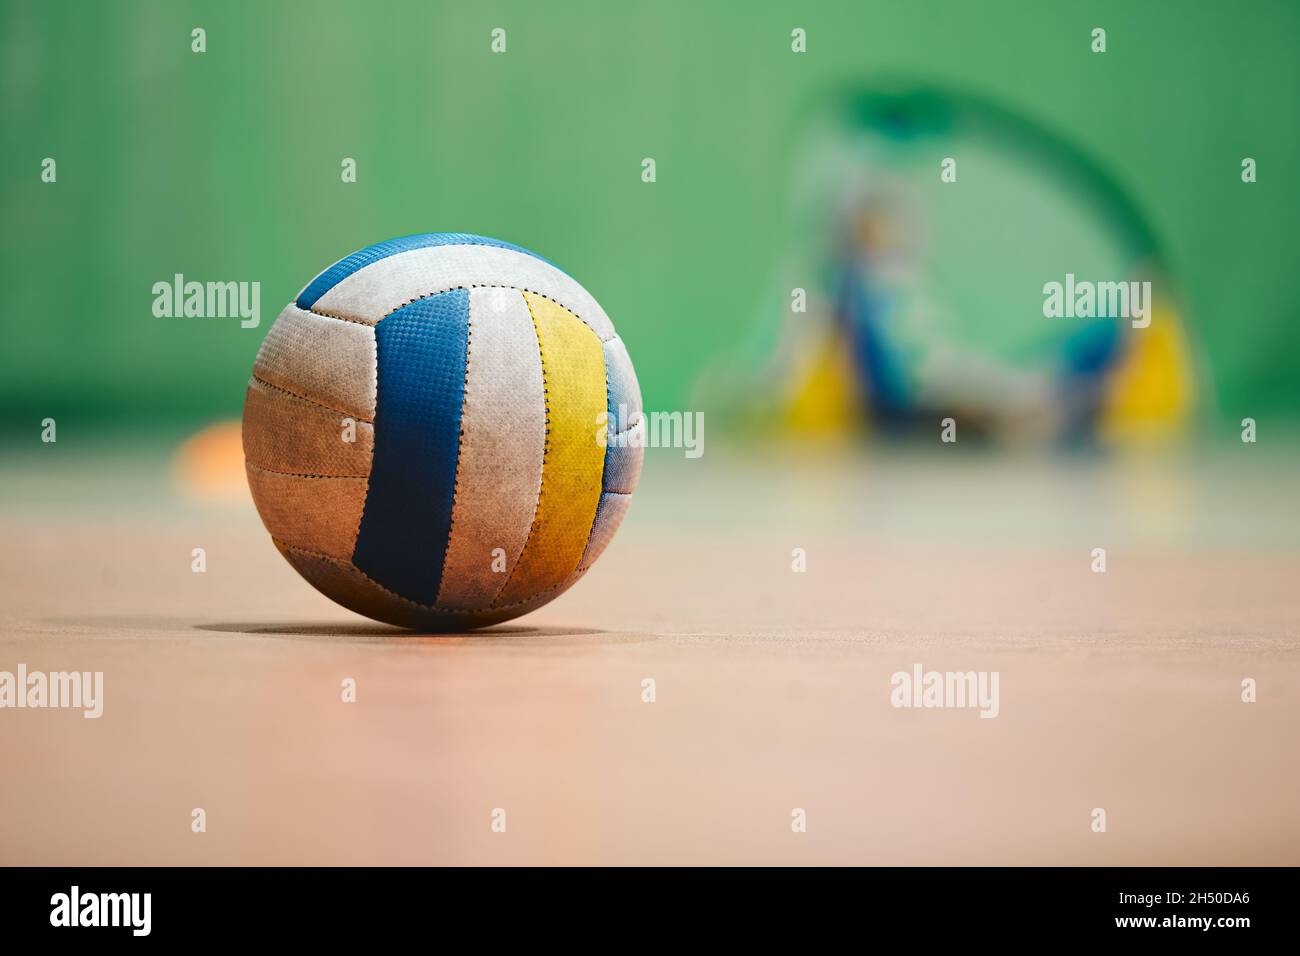 Volleyball on wooden court. Sports ball lying on indoor stadium parquet Stock Photo